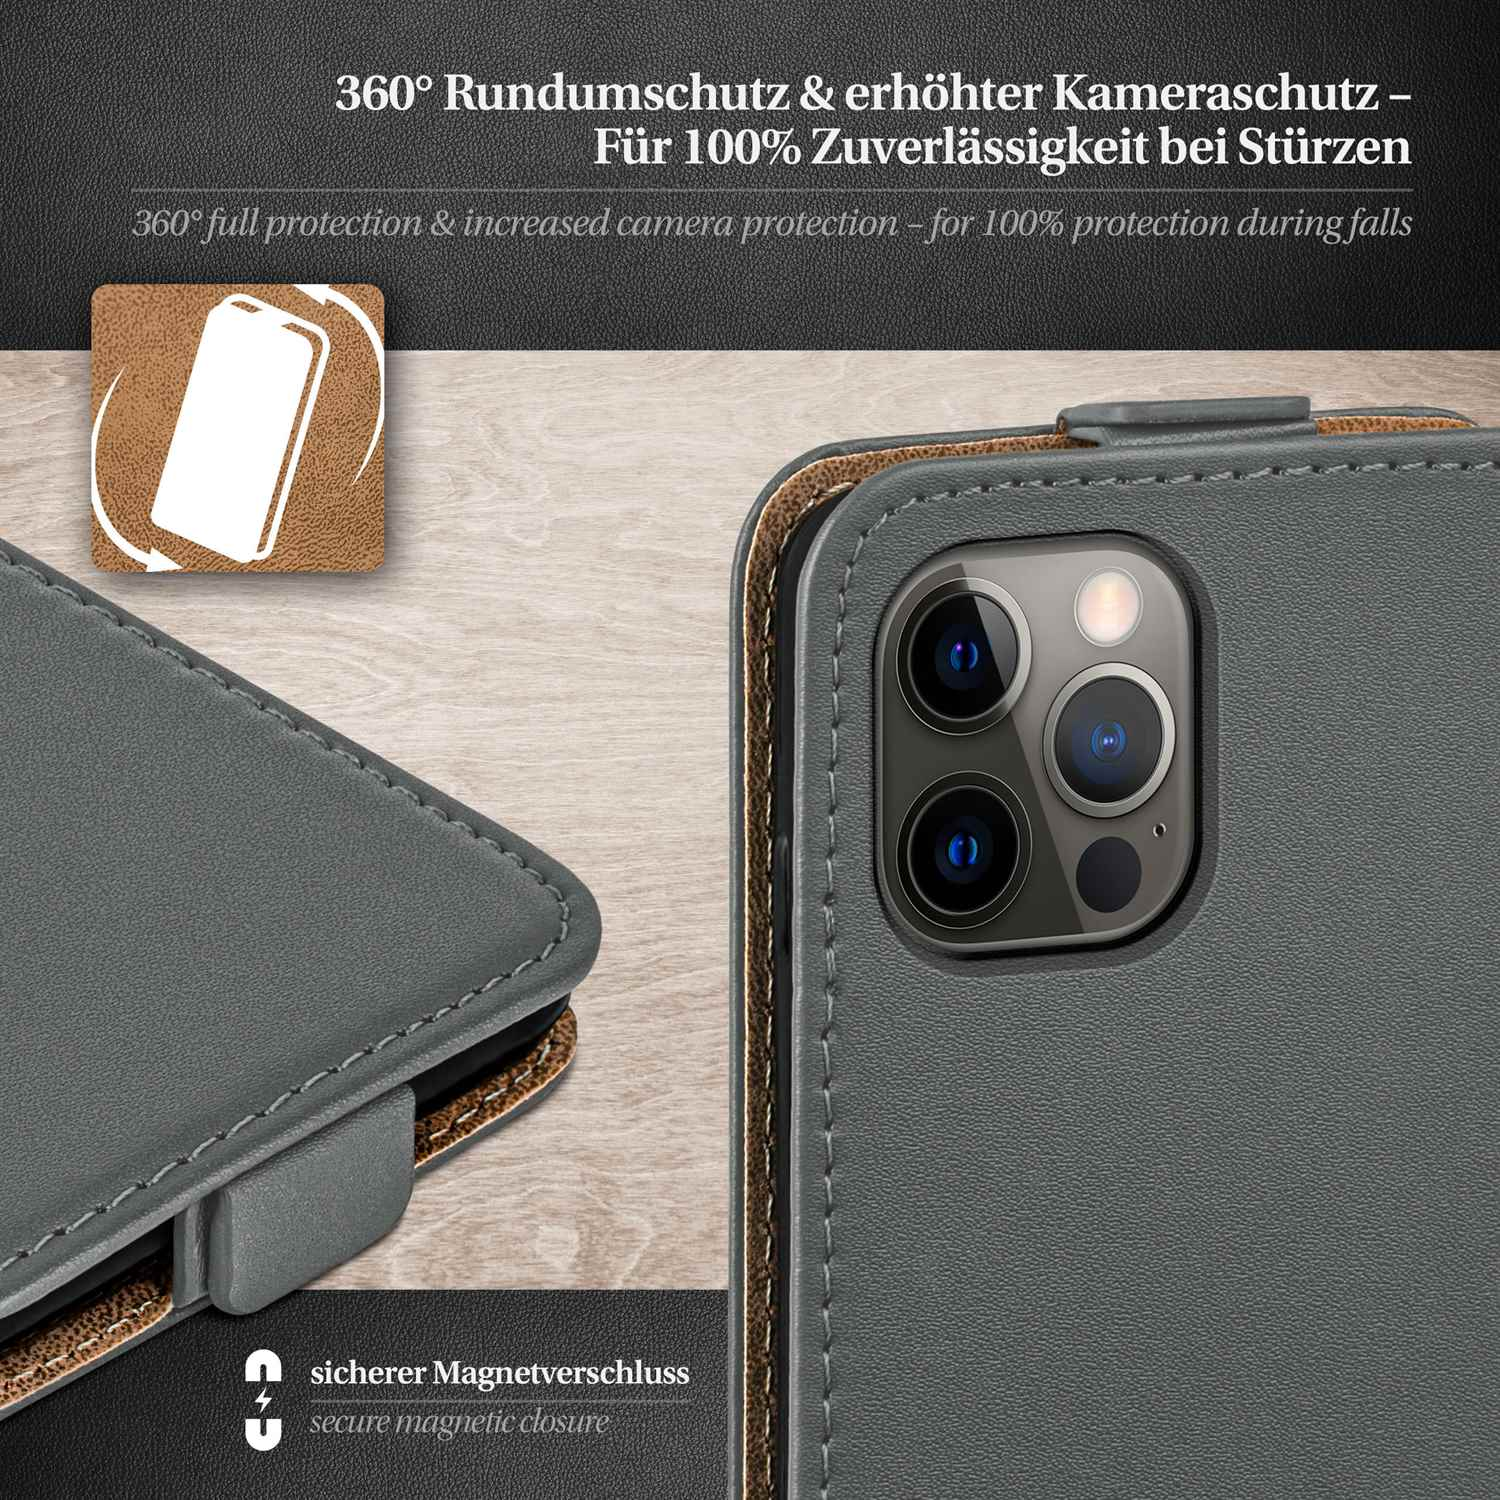 MOEX Flip Case, Flip Cover, Anthracite-Gray Pro iPhone 12 Apple, Max